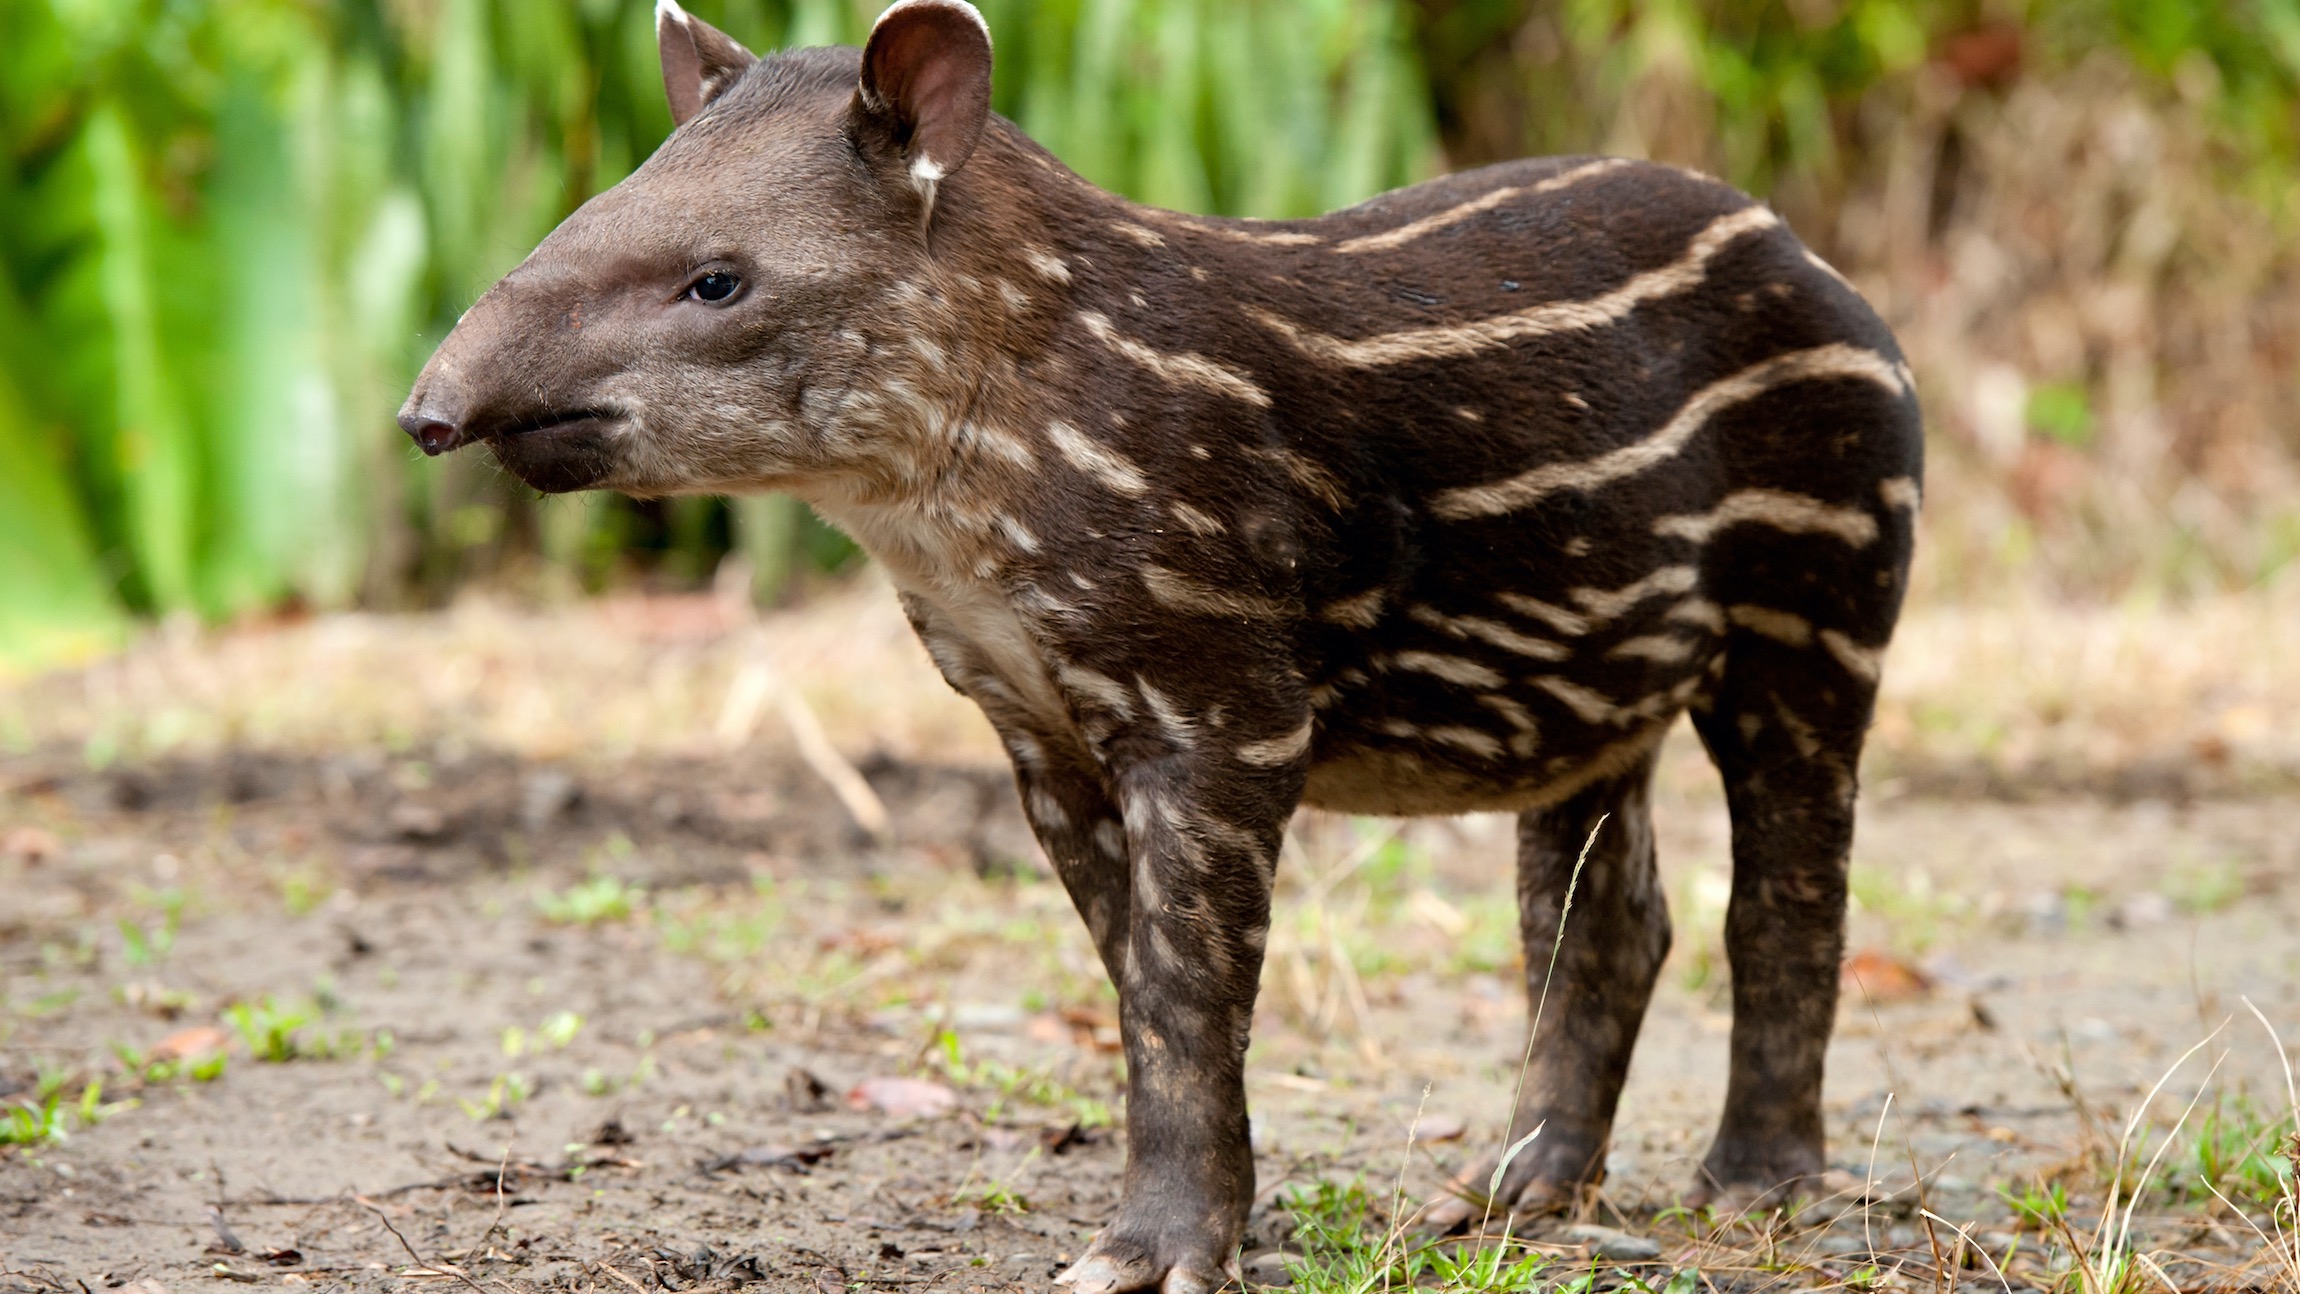 Brazilian tapir baby debuts in south China safari park - CGTN